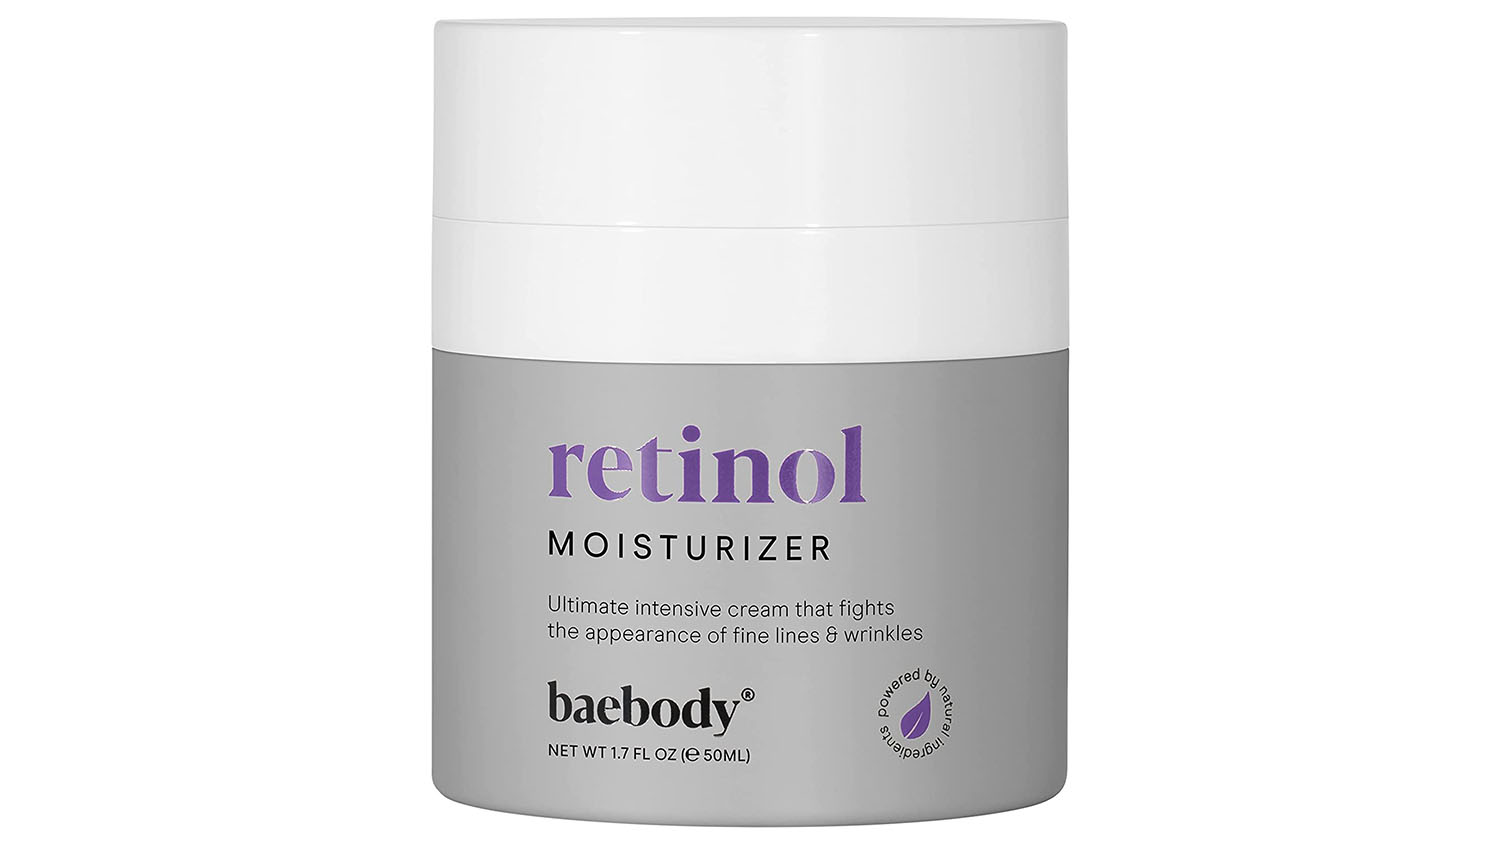 baebody retinol moisturizer cream